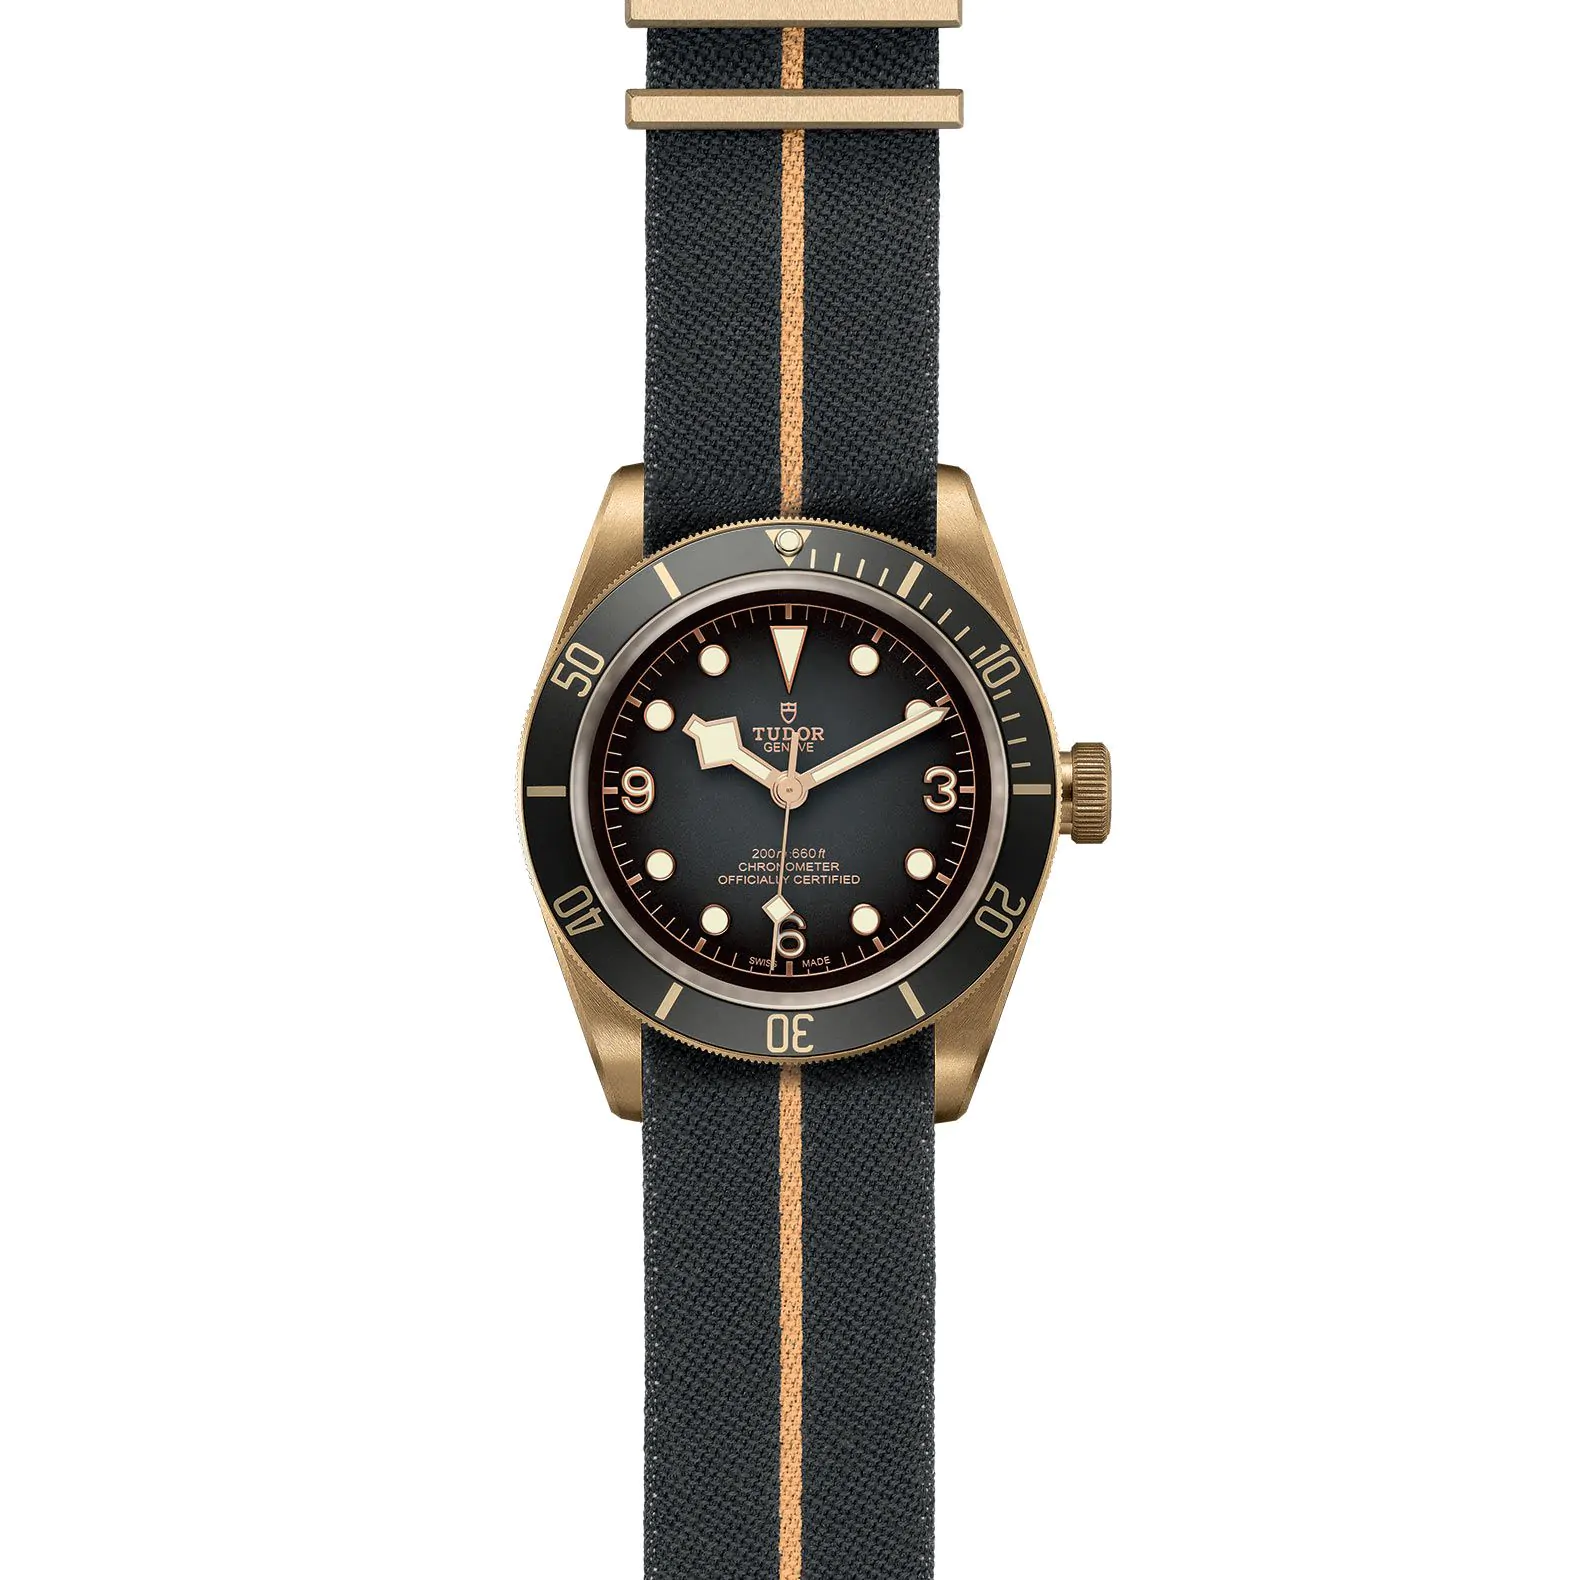 TUDOR Black Bay Bronze 43mm Watch M79250BA0002